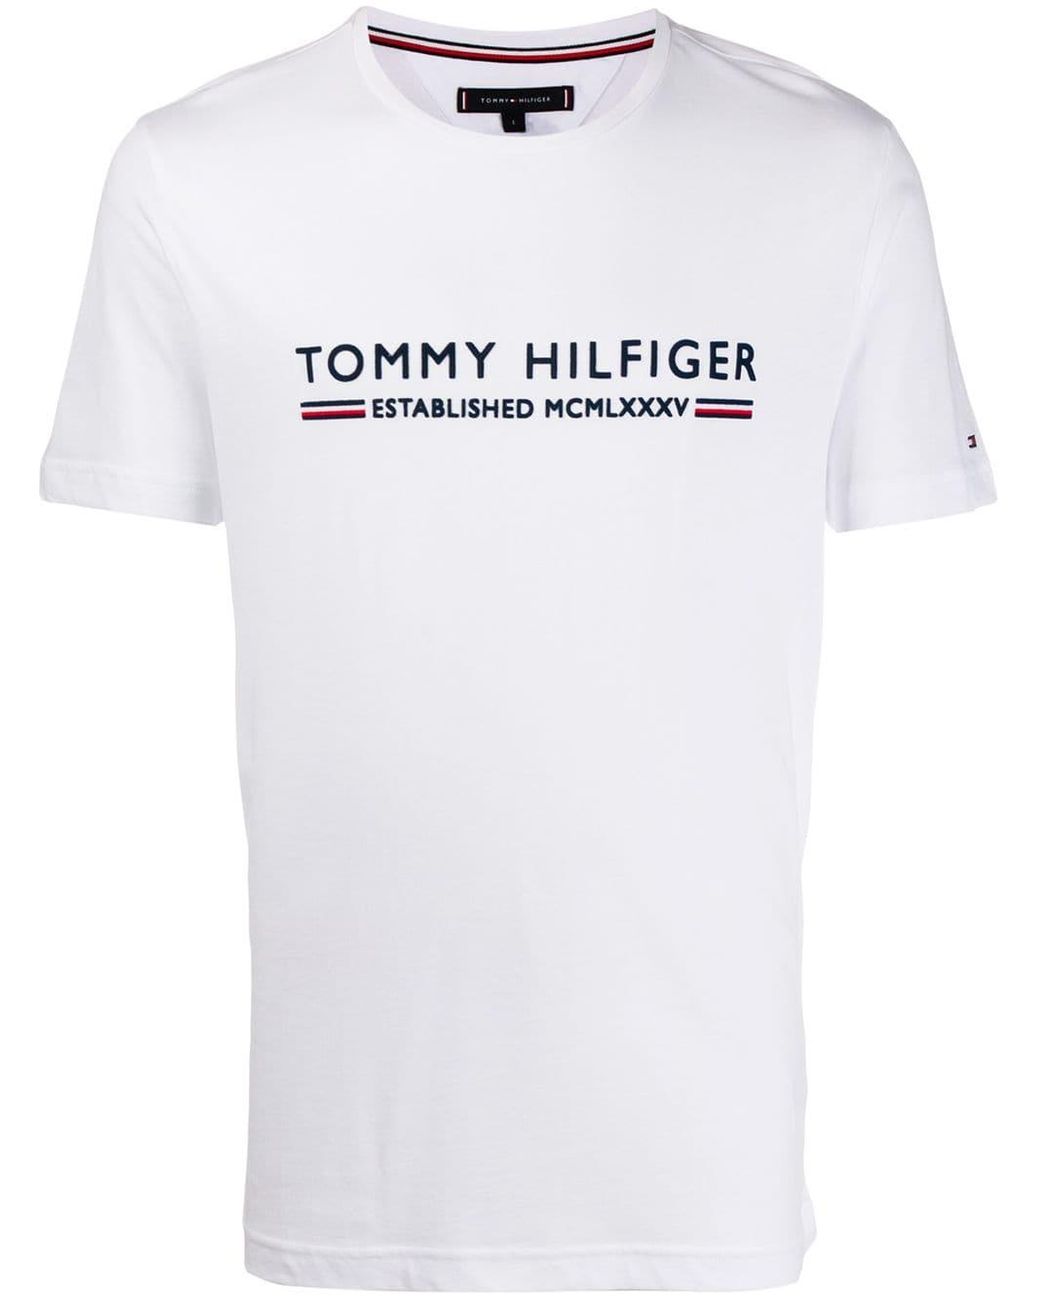 Tommy Hilfiger Mcmlxxxv T-shirt White for Lyst